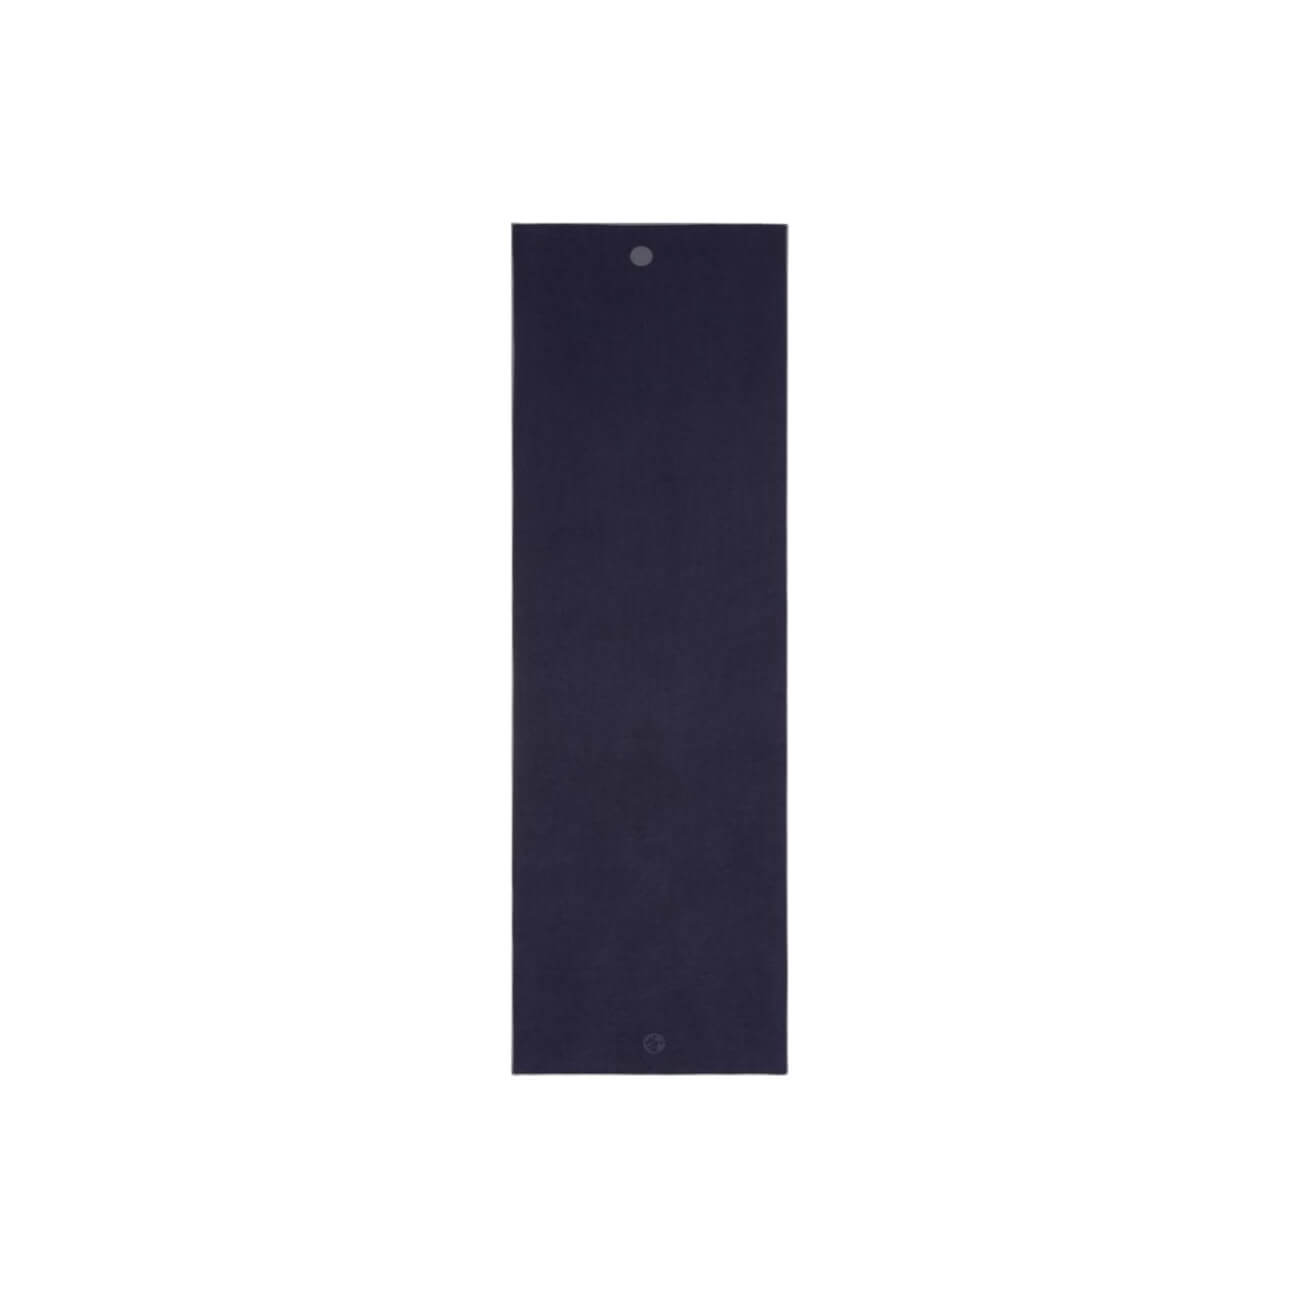 YOGA MAT TOWEL 2.0 MIDNIGHT BLUE